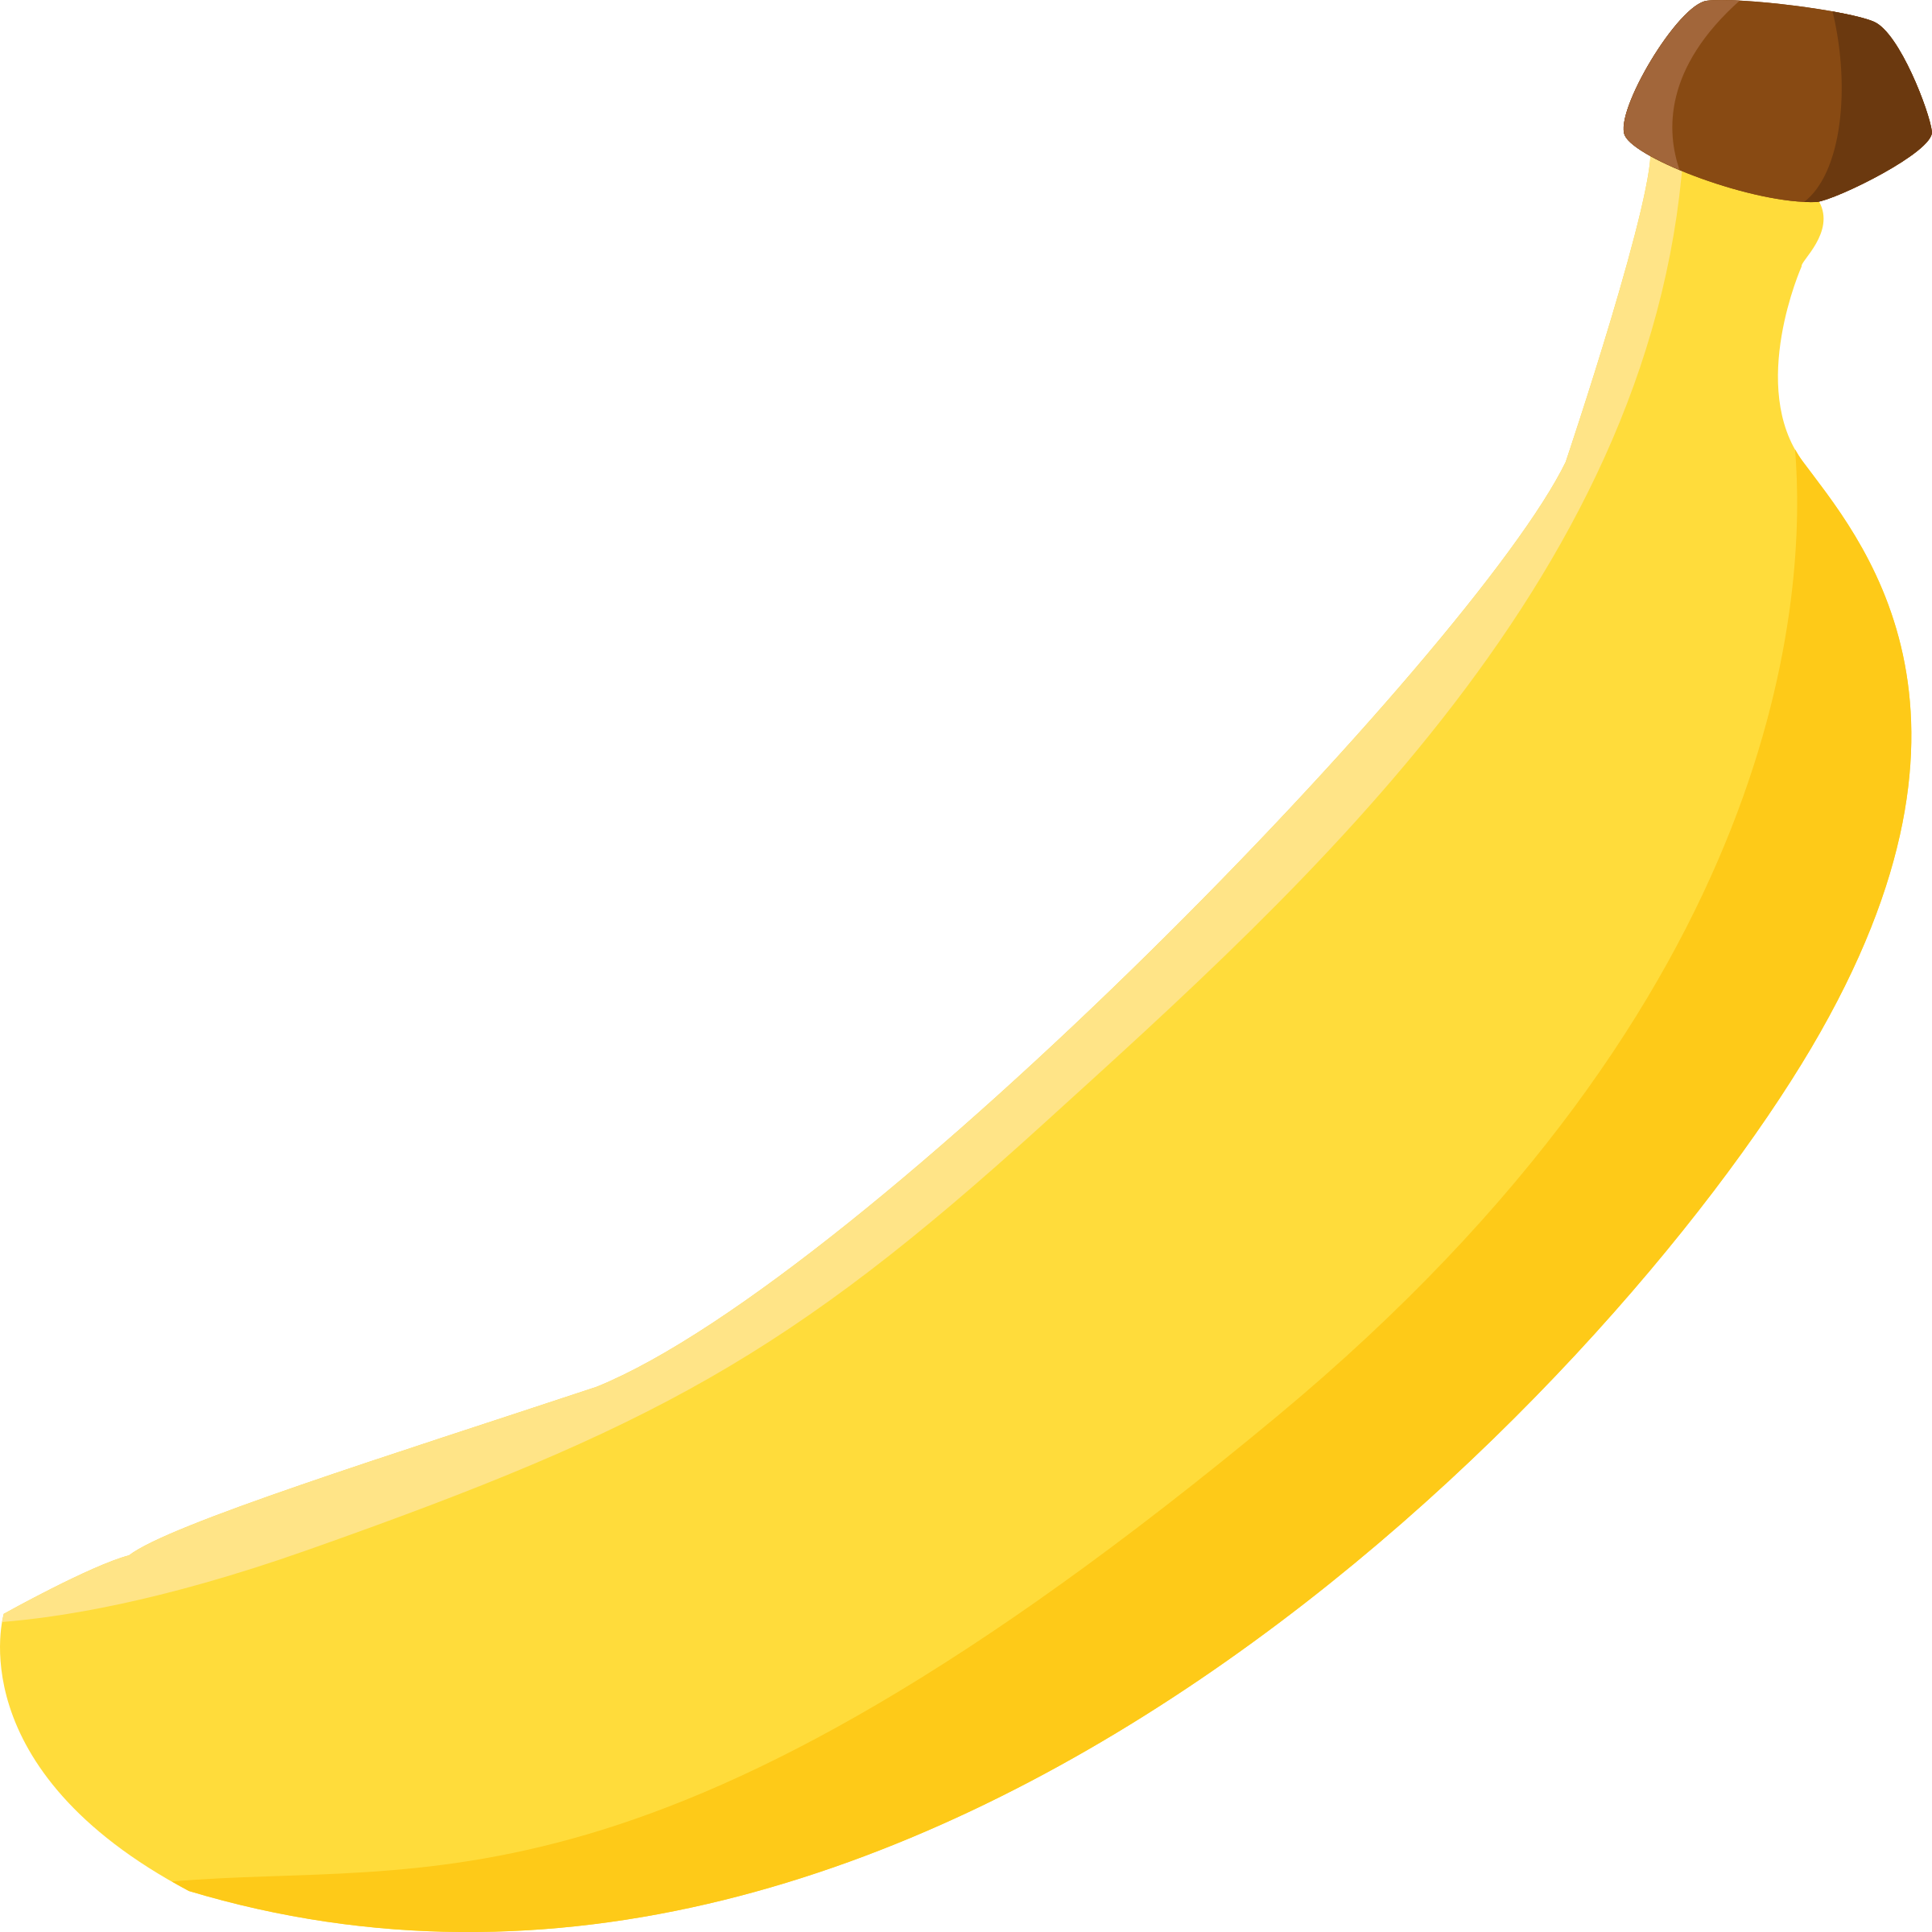 Clipart banana simple banana, Clipart banana simple banana